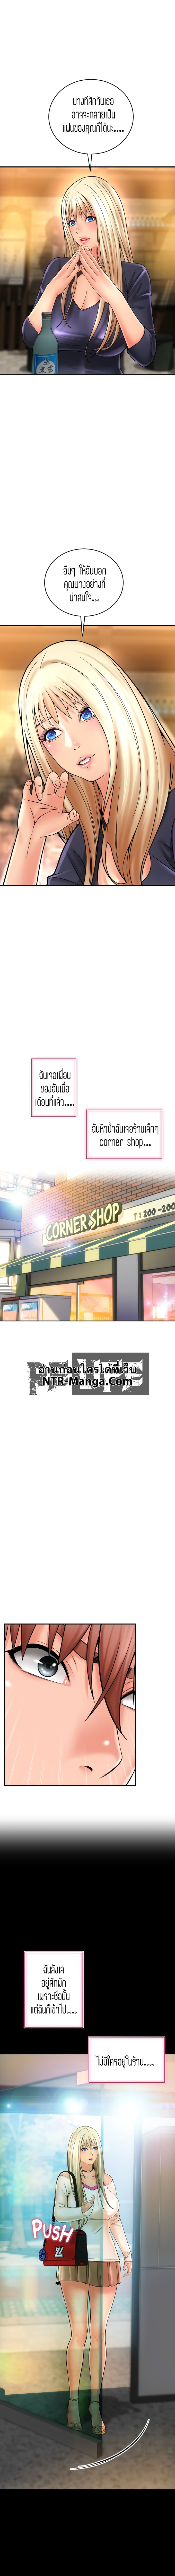 Corner Shop 19 (14)